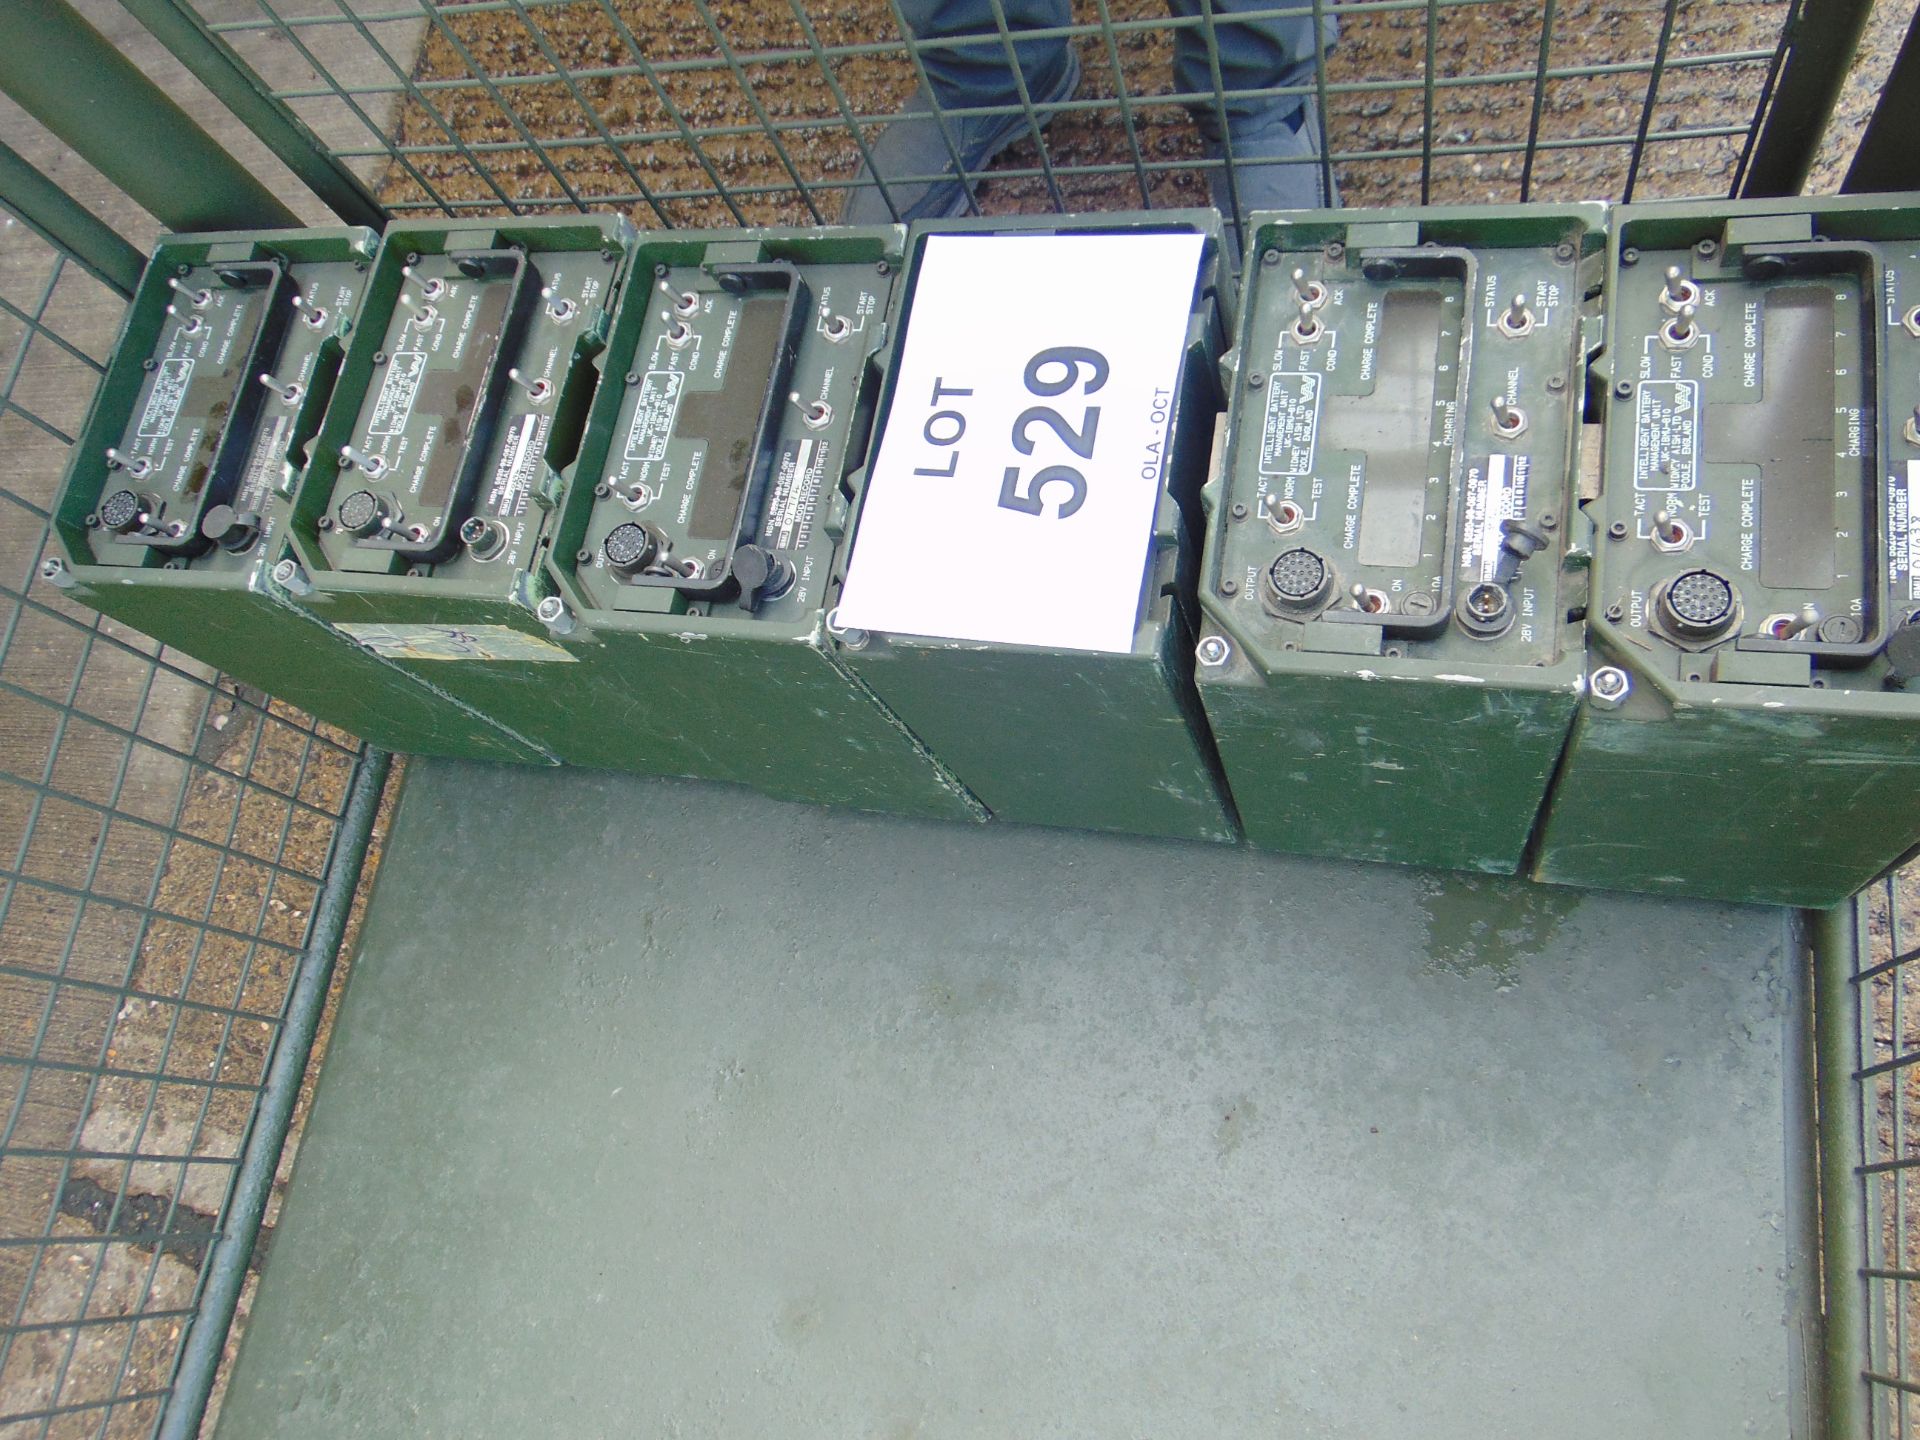 6 x Clansman intelligent battery management units as shown